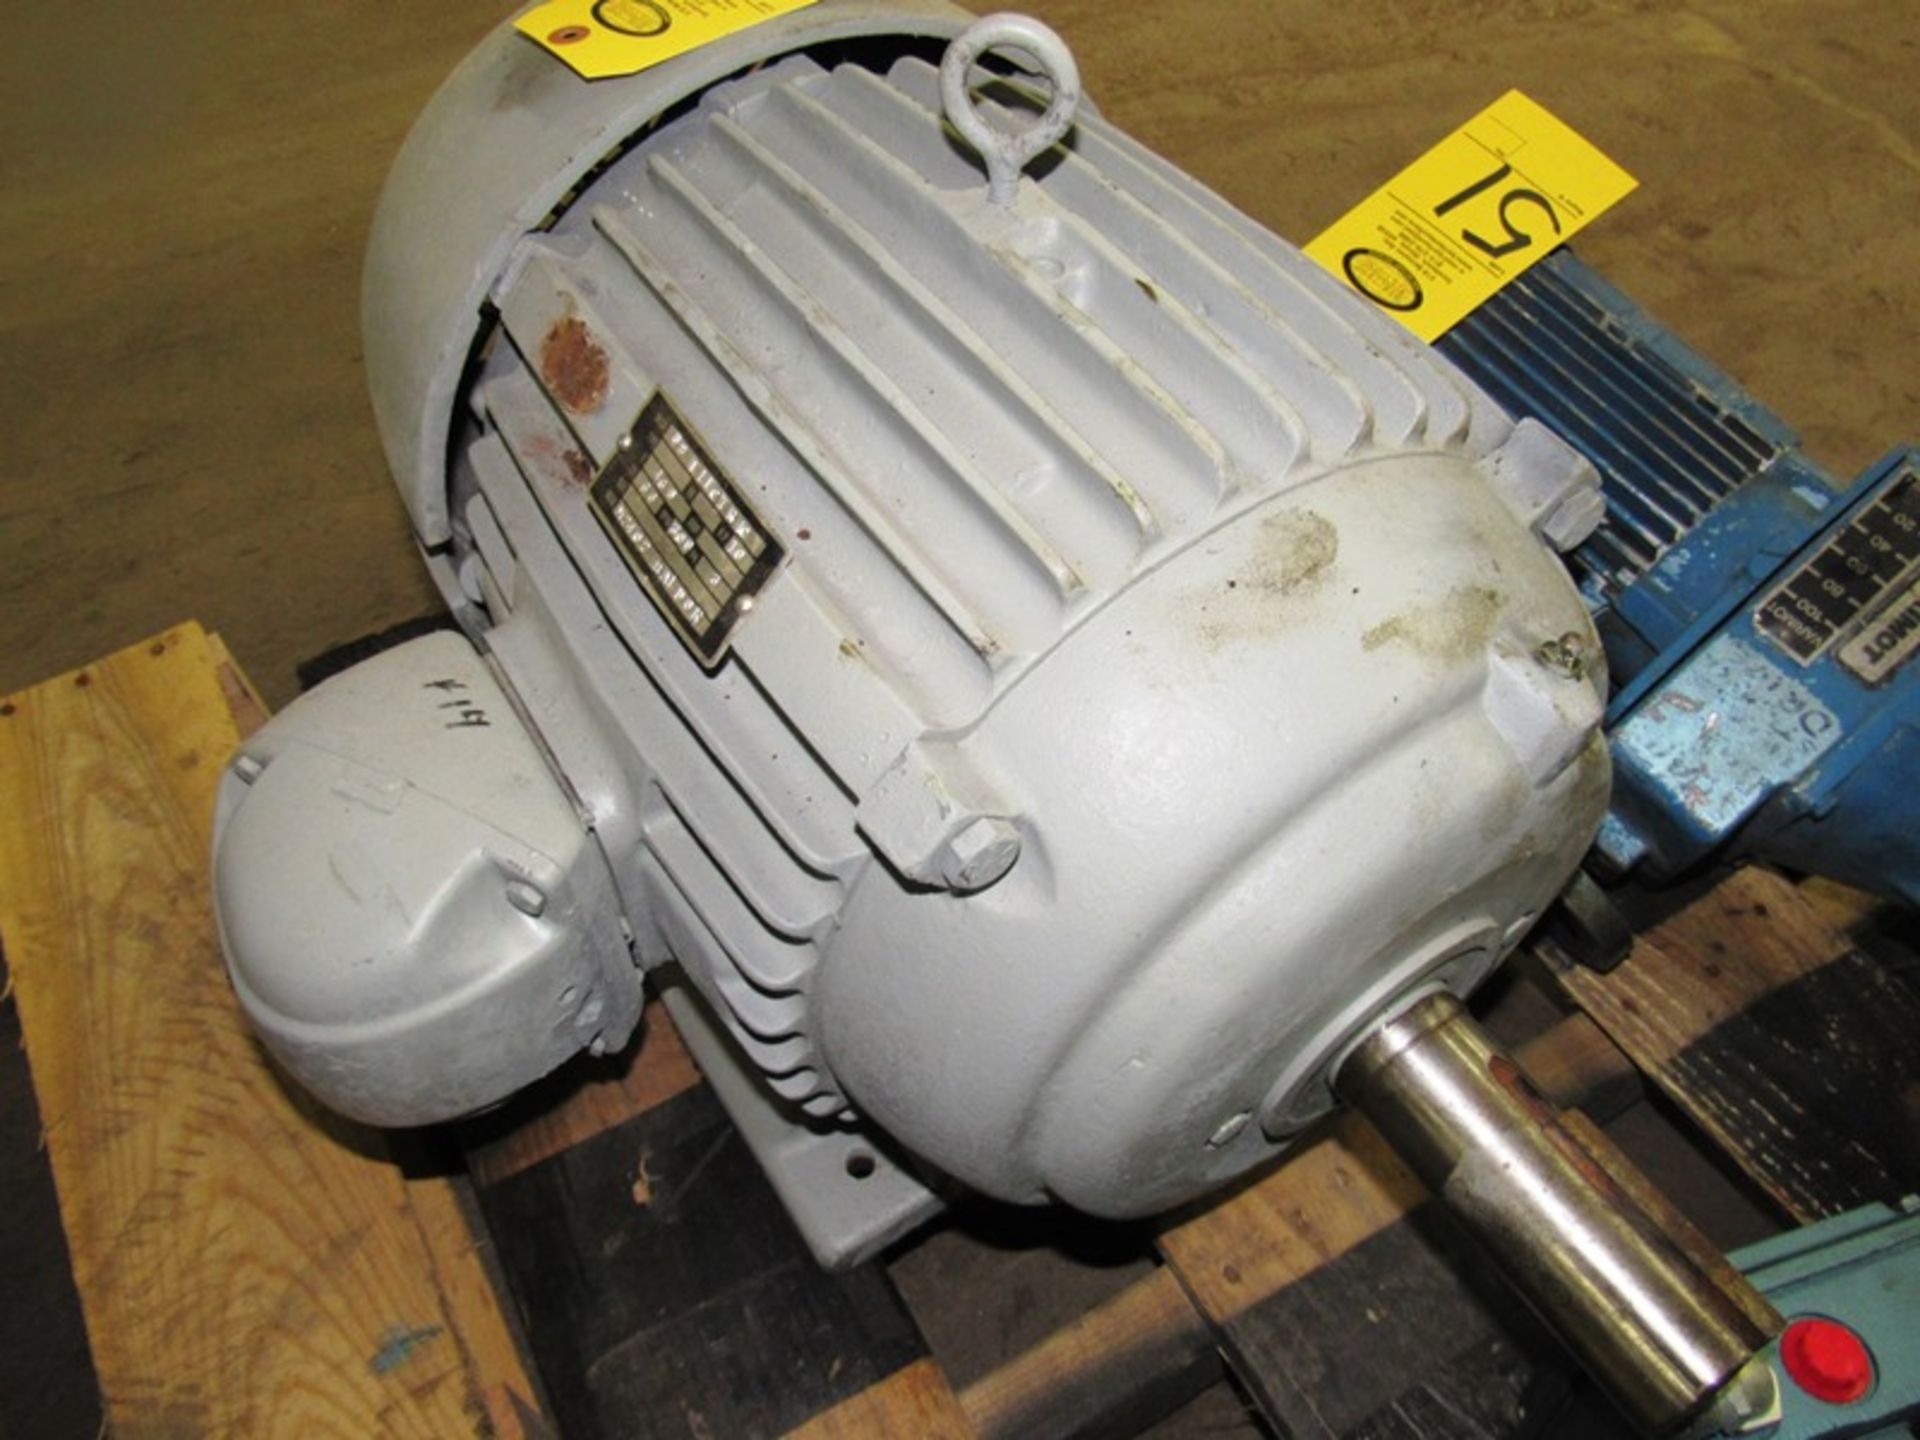 Lot (1) Motor on Gearbox, (1) Gearbox Type R80D34BDT100L4-KS & (1) Motor, 10 h.p., 460 volts, - Bild 8 aus 8